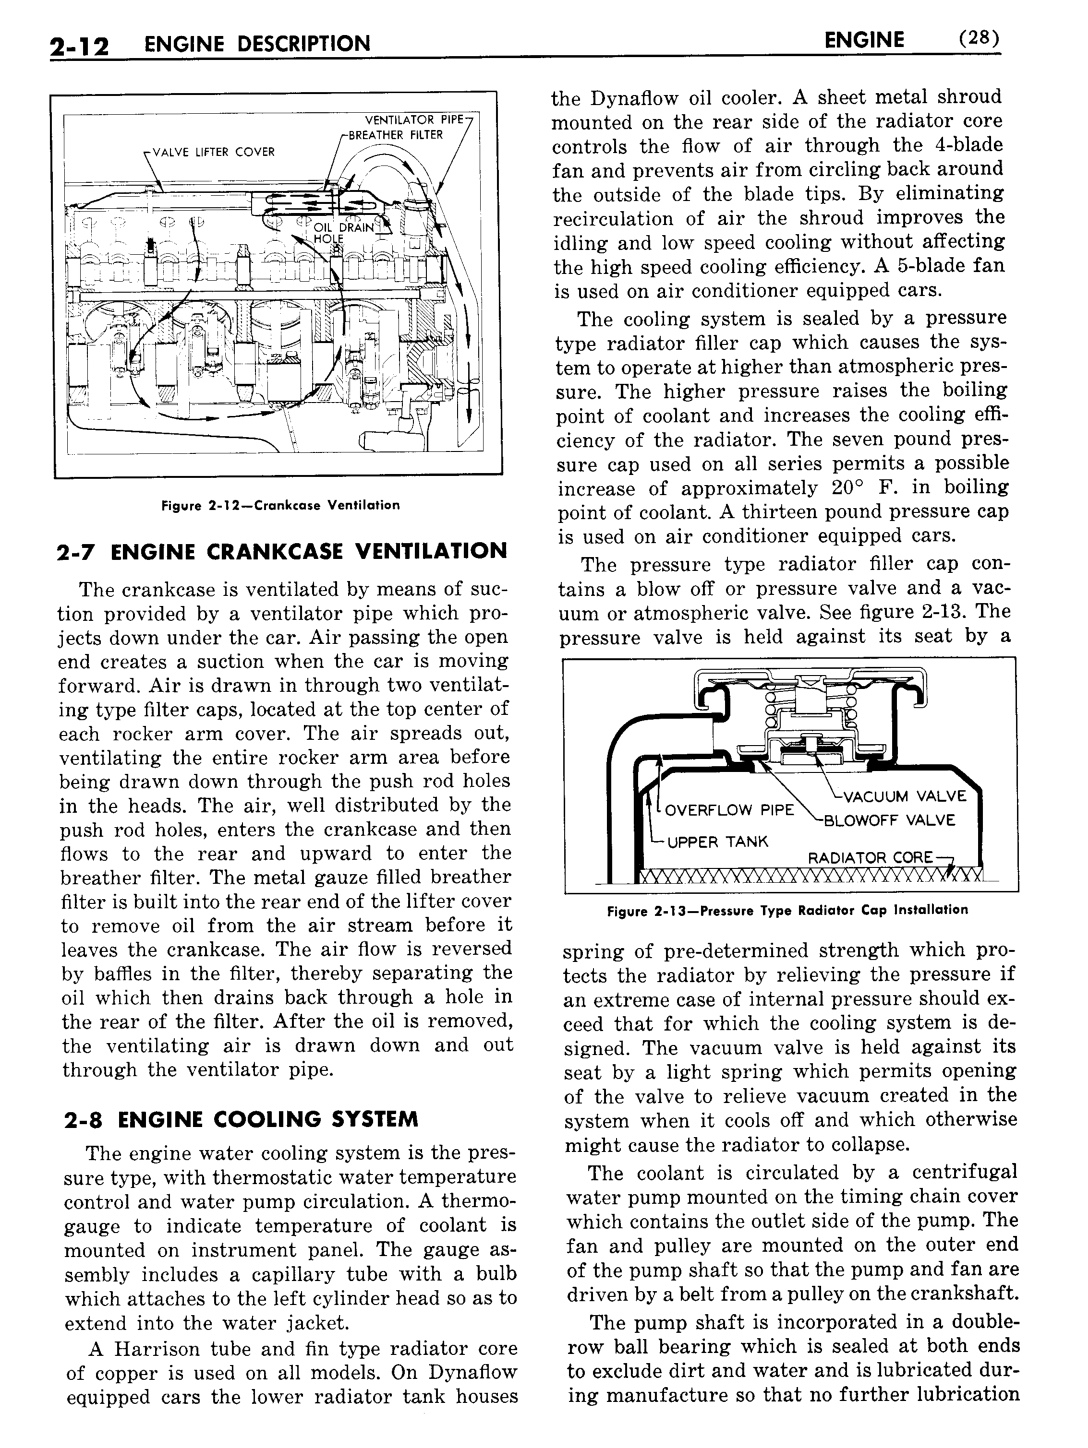 n_03 1956 Buick Shop Manual - Engine-012-012.jpg